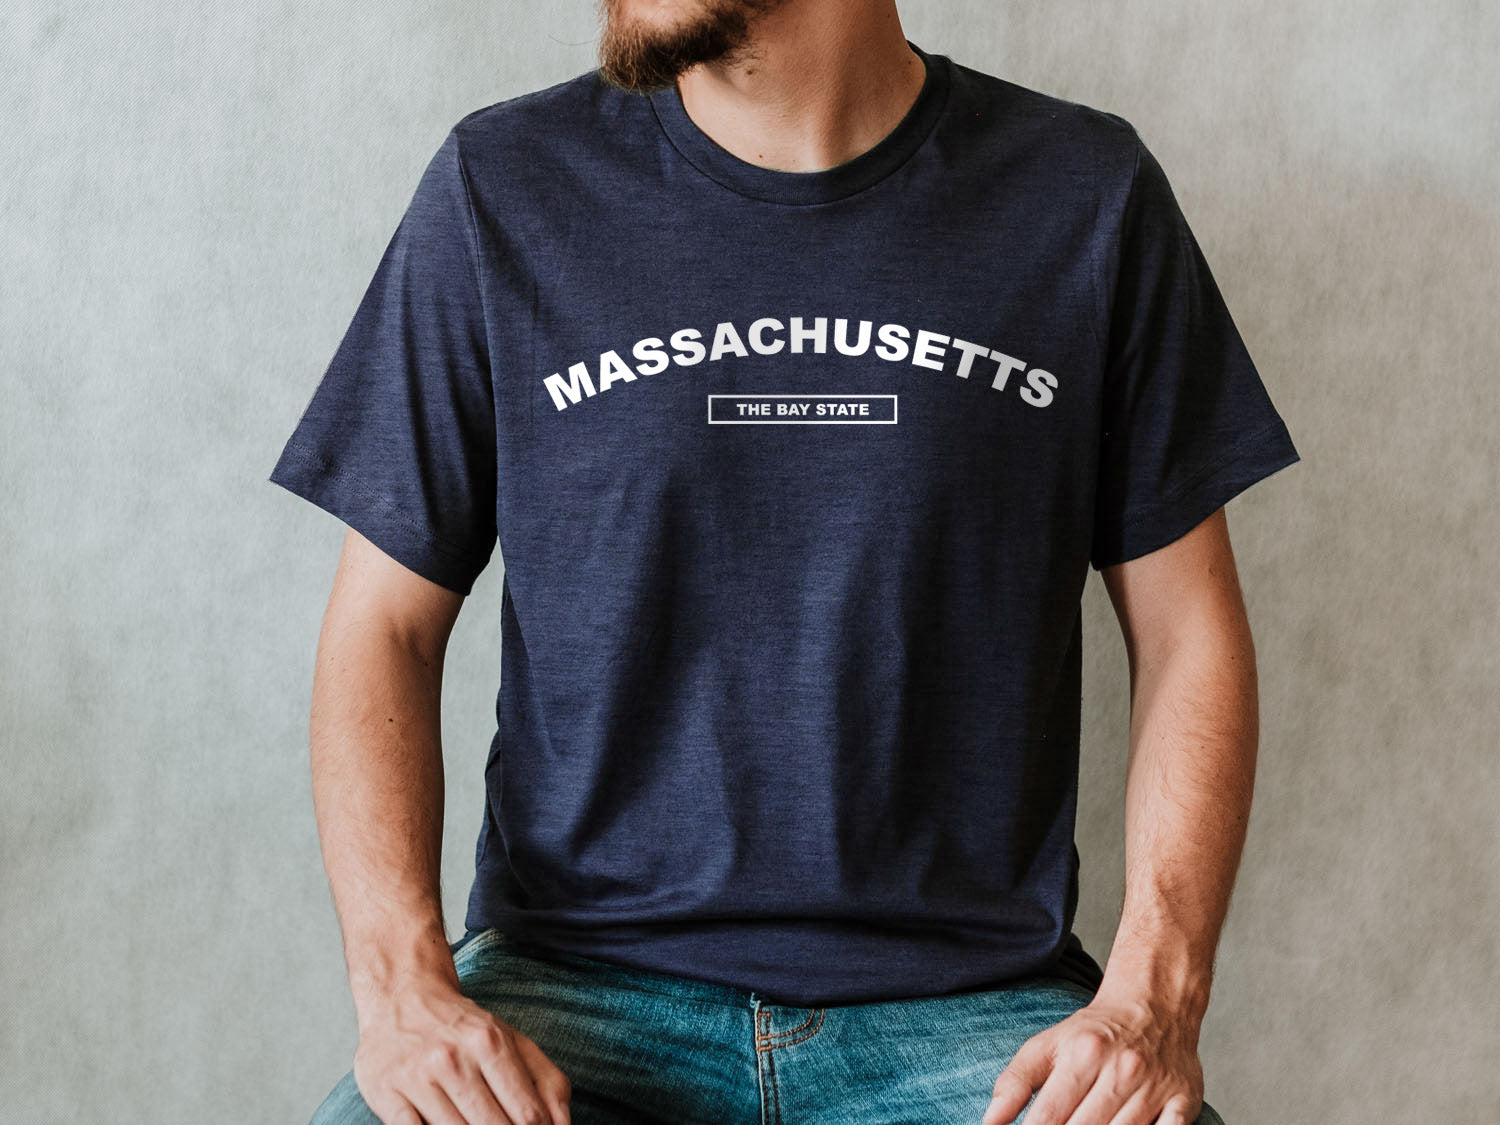 Massachusetts The Bay State T-shirt - United States Name & Slogan Minimal Design Printed Tee Shirt